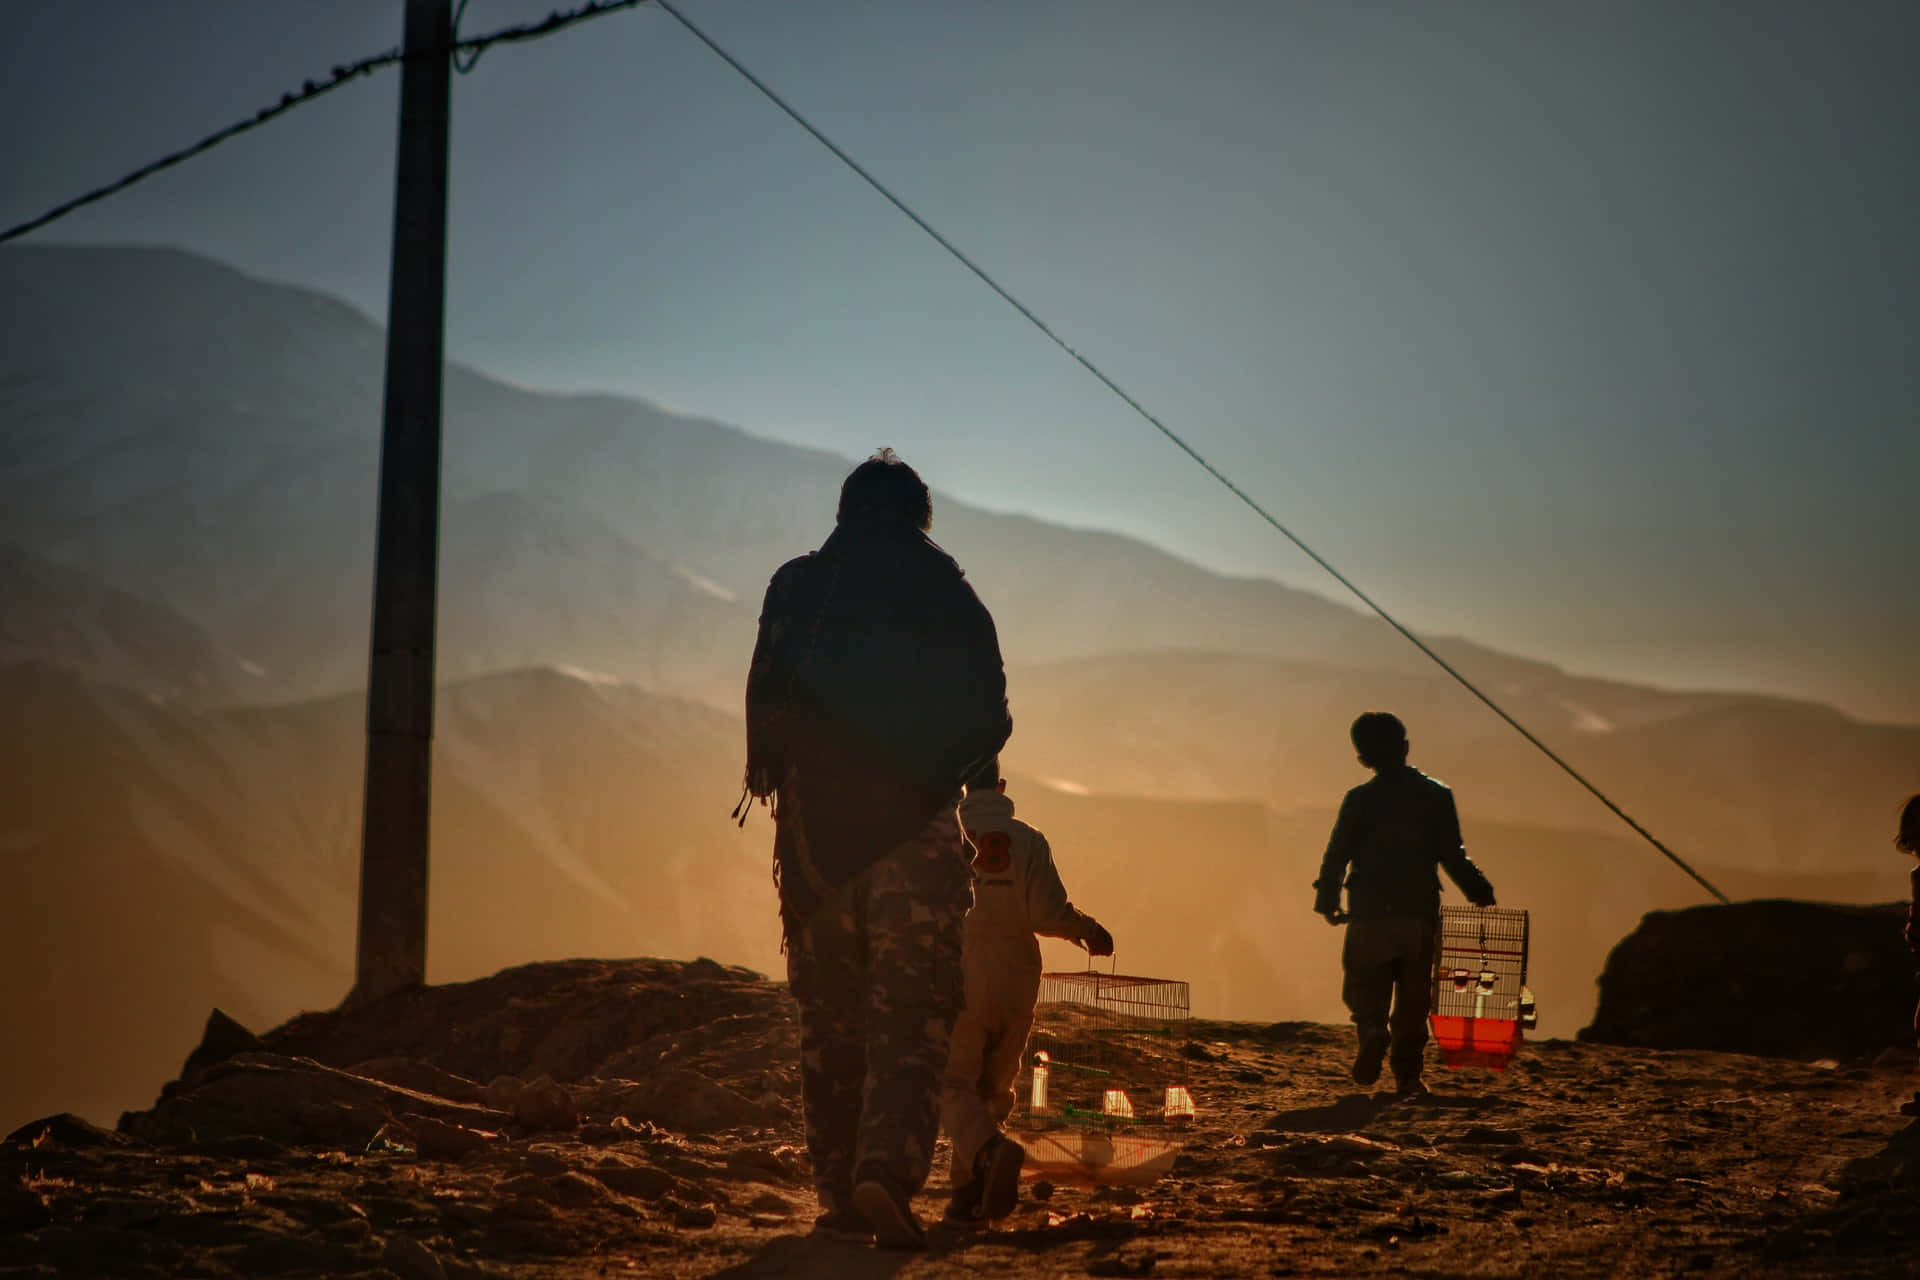 The sun sets across the stark landscape of Afghanistan